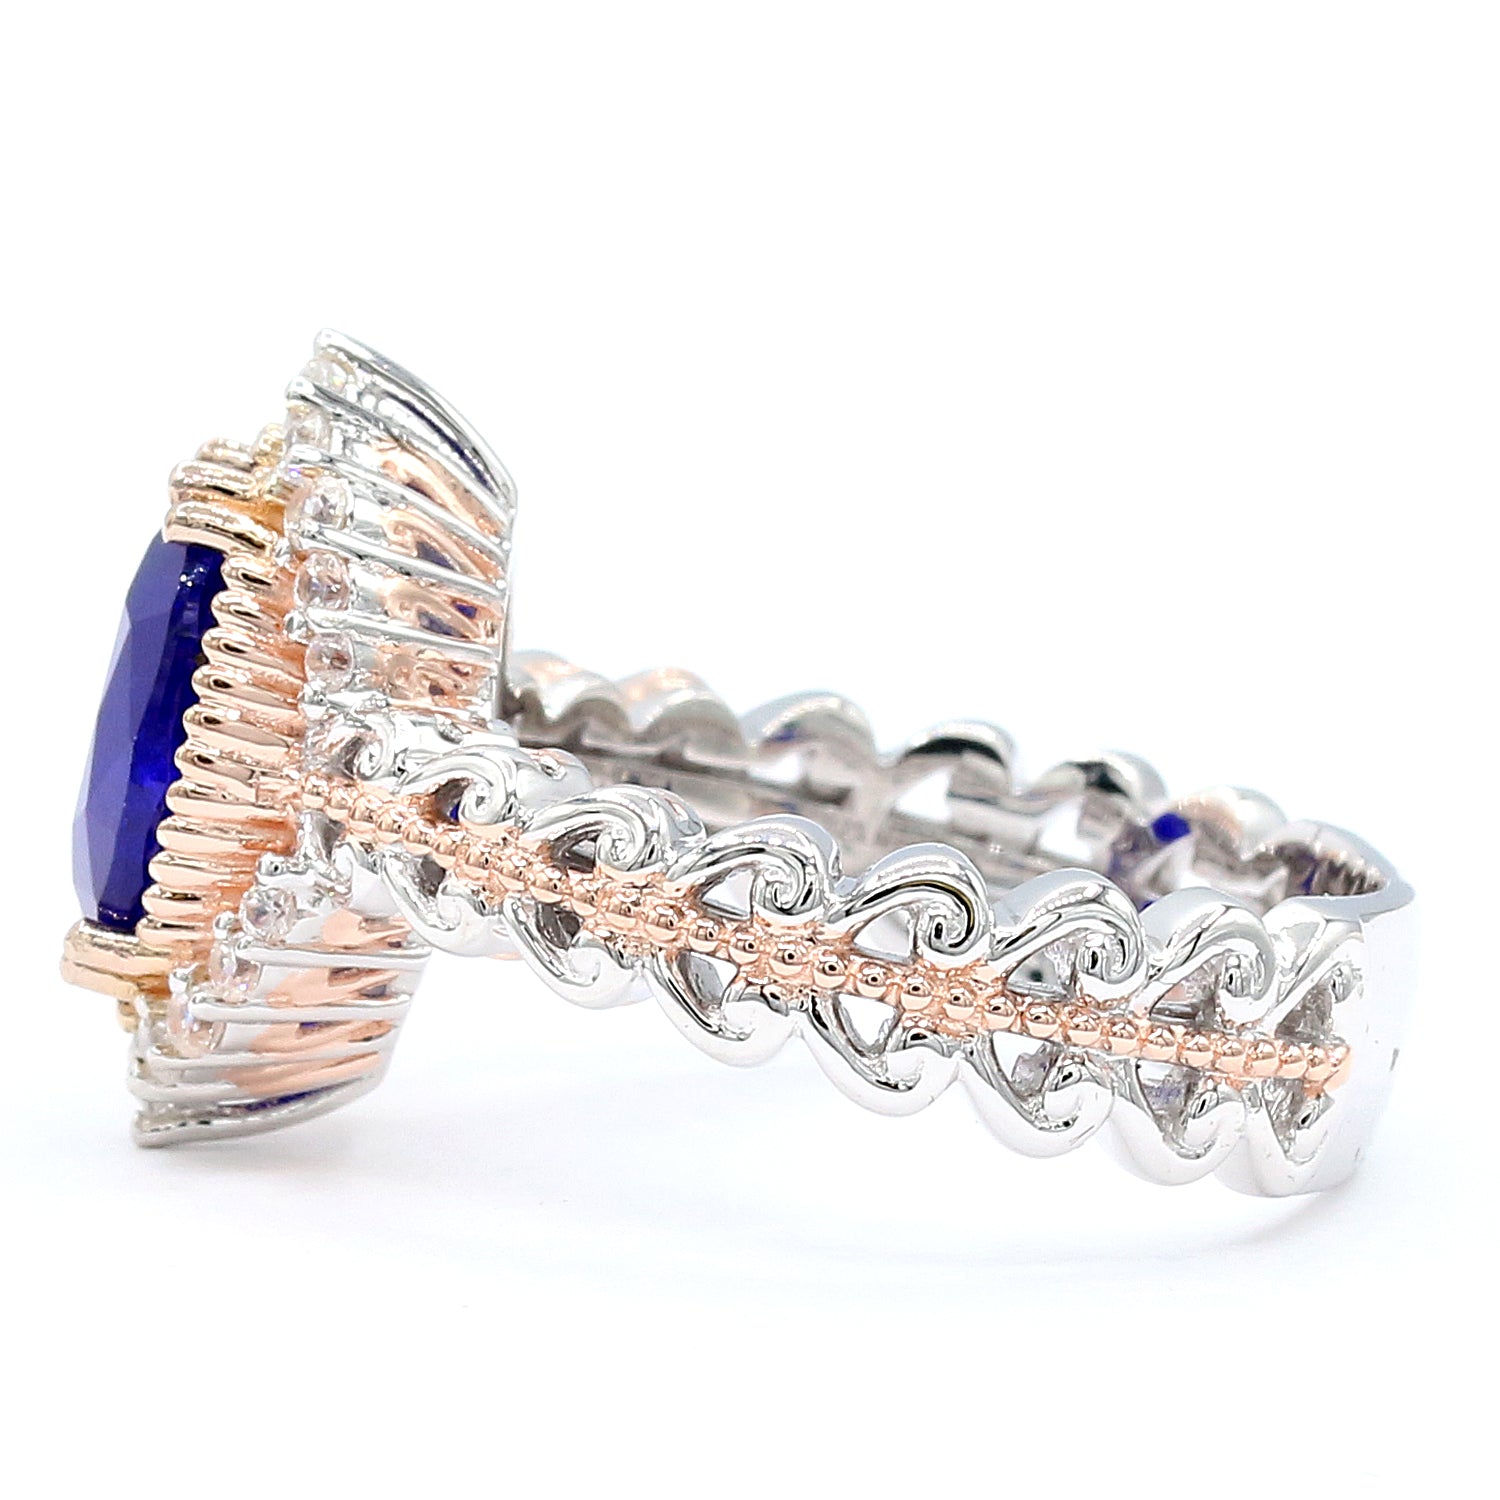 Limited Edition Gems en Vogue 5.27ctw Cobalt Blue Spinel & White Zircon Ring